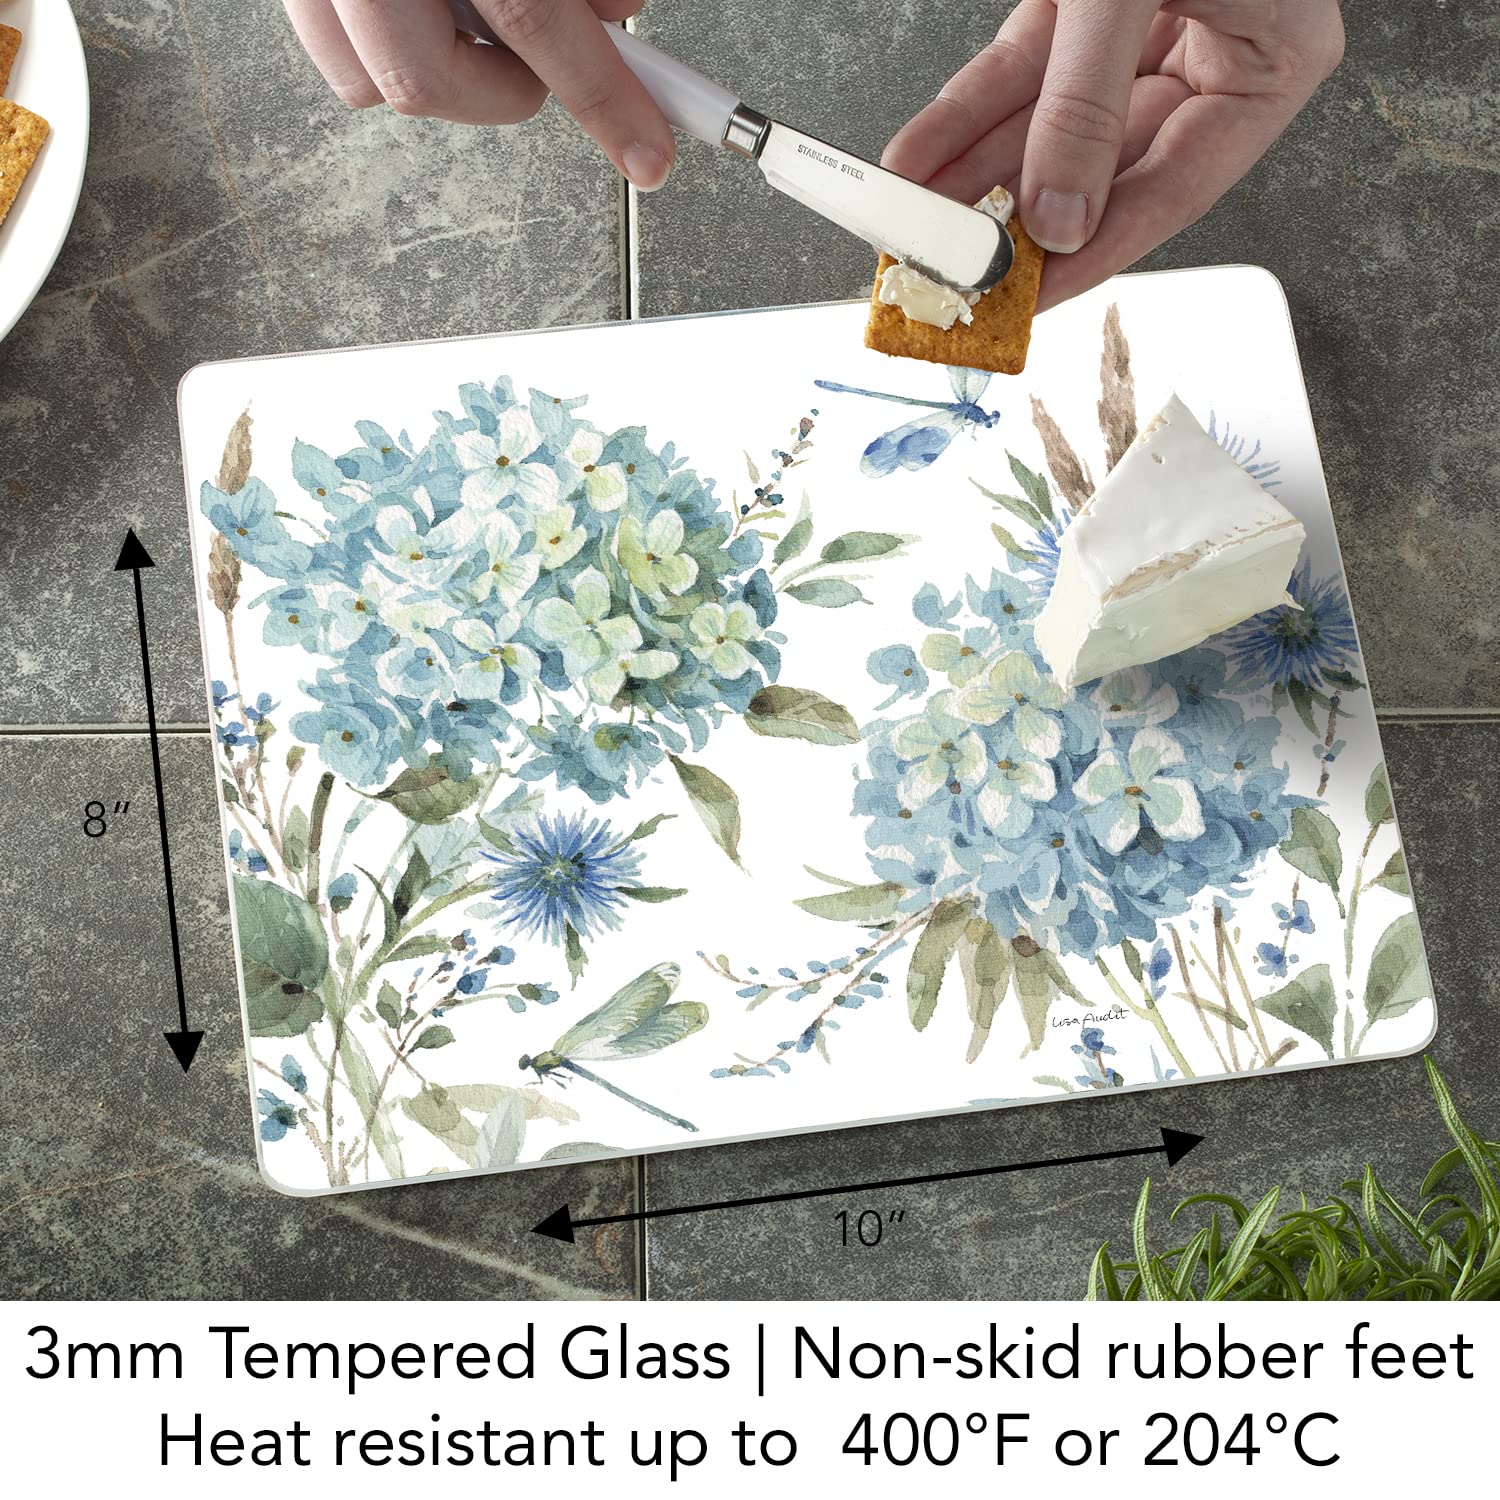 CounterArt Bohemian Blue 3mm Heat Tolerant Tempered Glass Cutting Board 10” x 8” Manufactured in the USA Dishwasher Safe